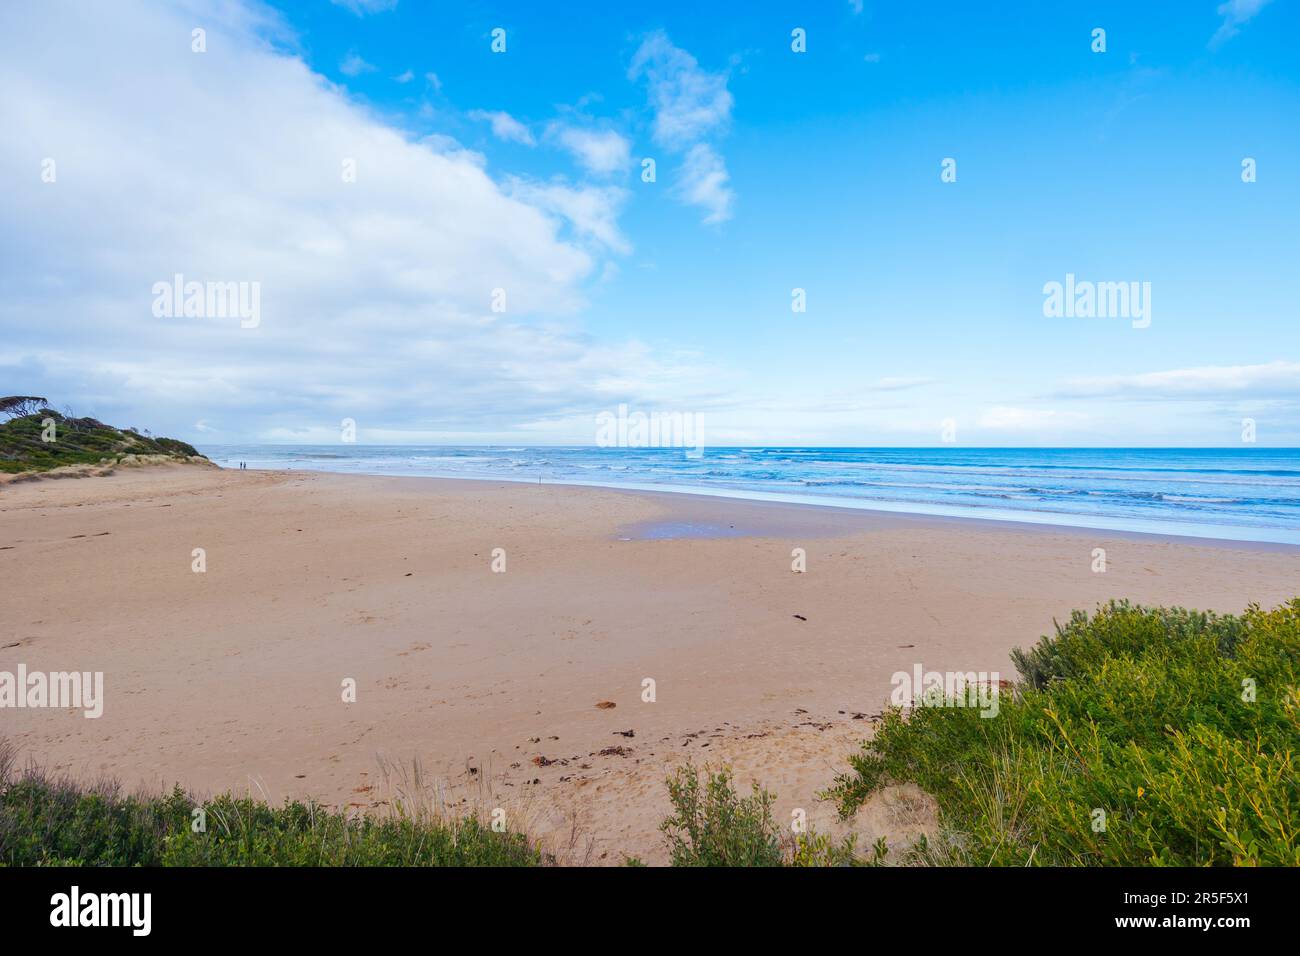 Anglesea Beach and ocean on a stormy cool autumn dayin Anglesea, Victoria, Australia Stock Photo